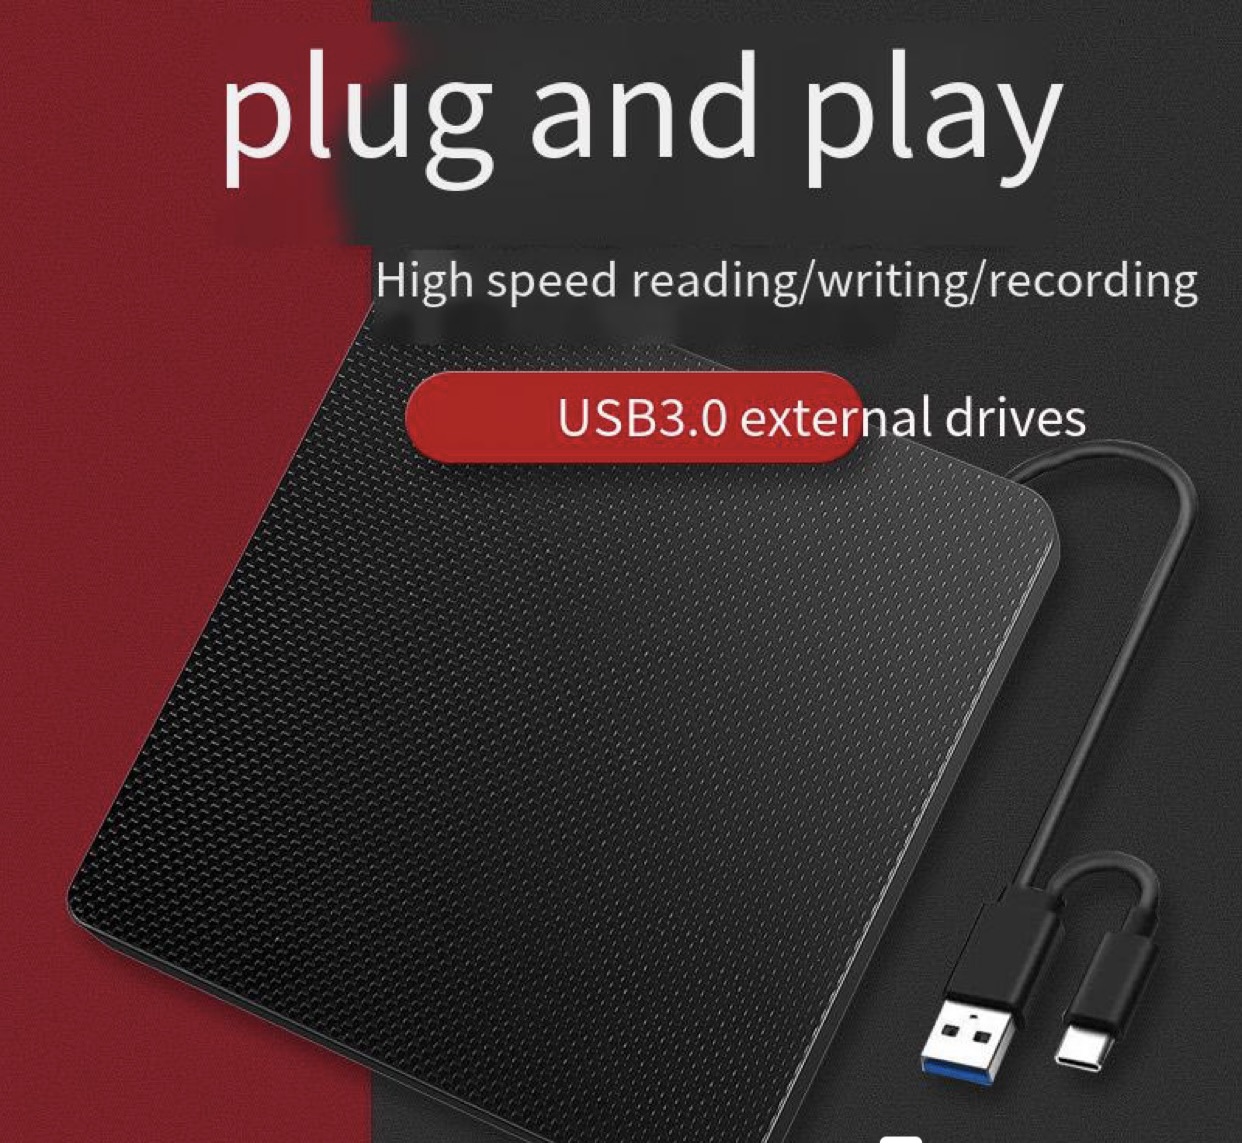 USB+typeC external DVD burner multifunctional laptop universal external USB external optical drive